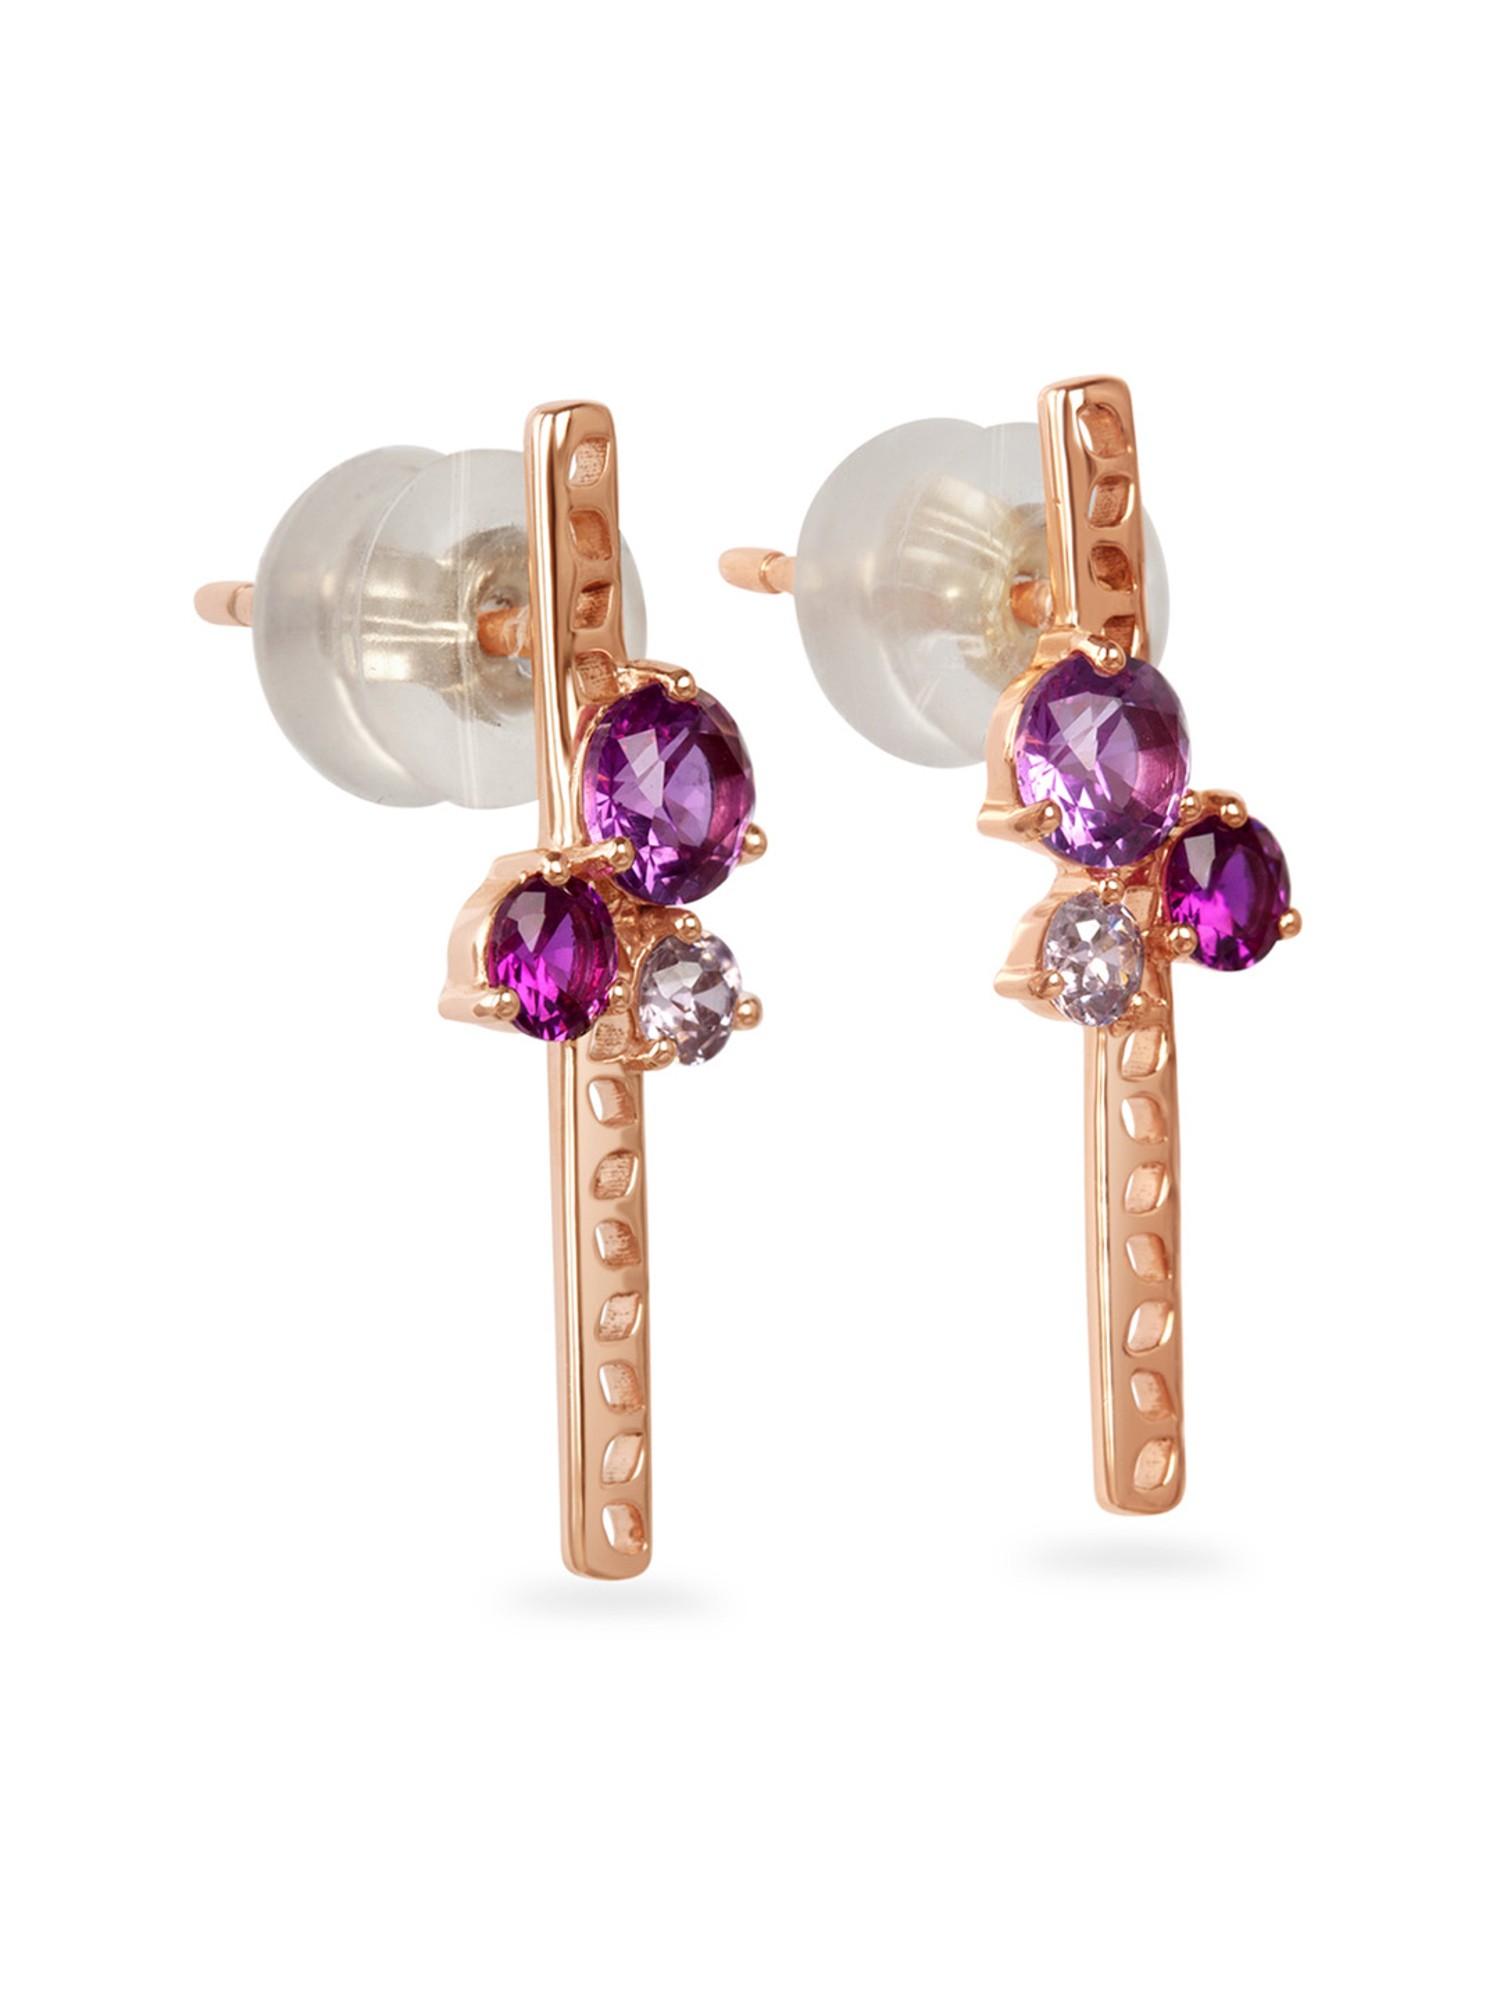 Buy PAVOI 14K Rose Gold Plated Cuff Earrings Huggie Stud  Small Hoop  Earrings for Women at Amazonin